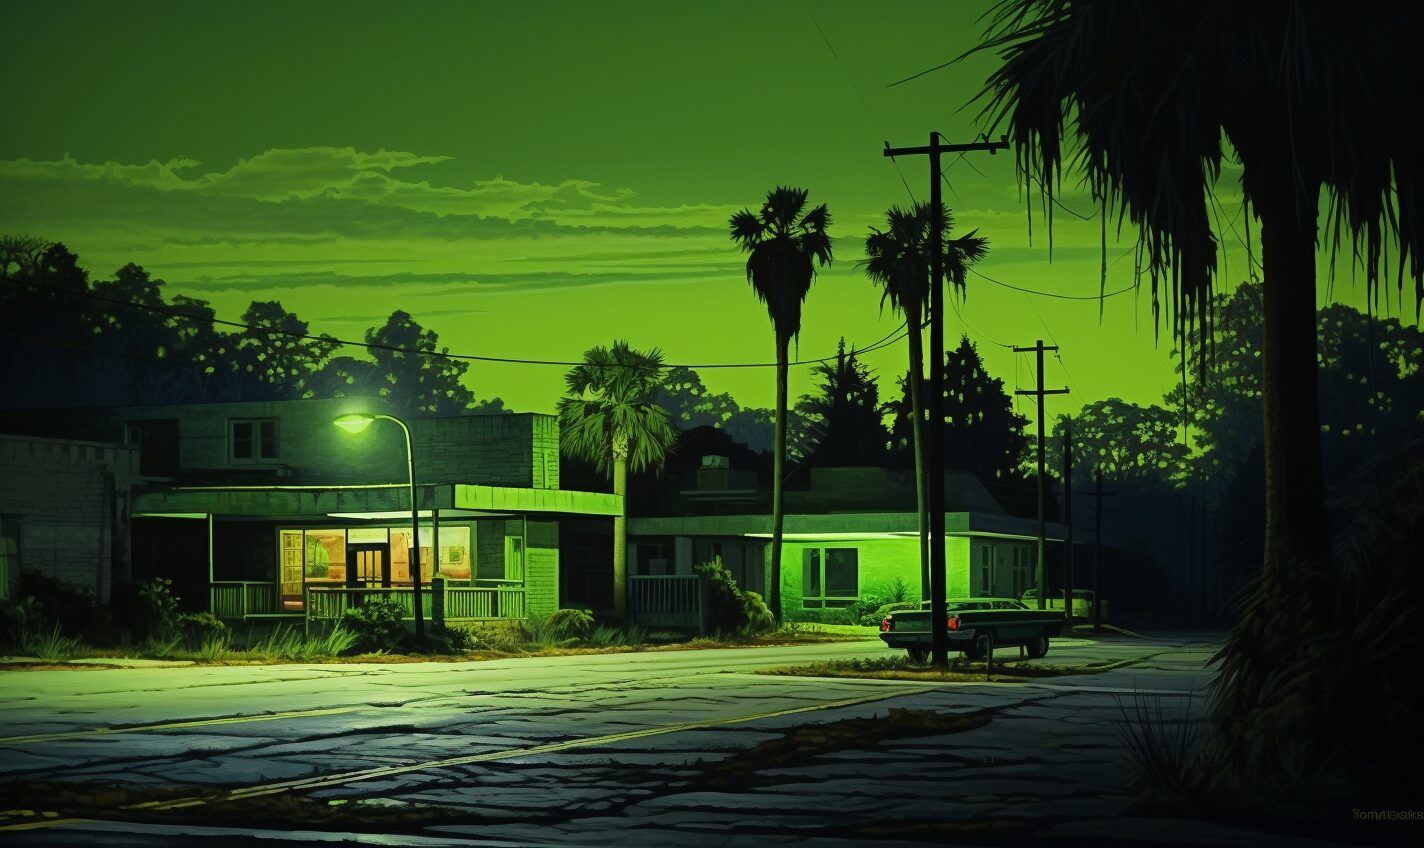 north charleston, south carolina in a black and neon green glow